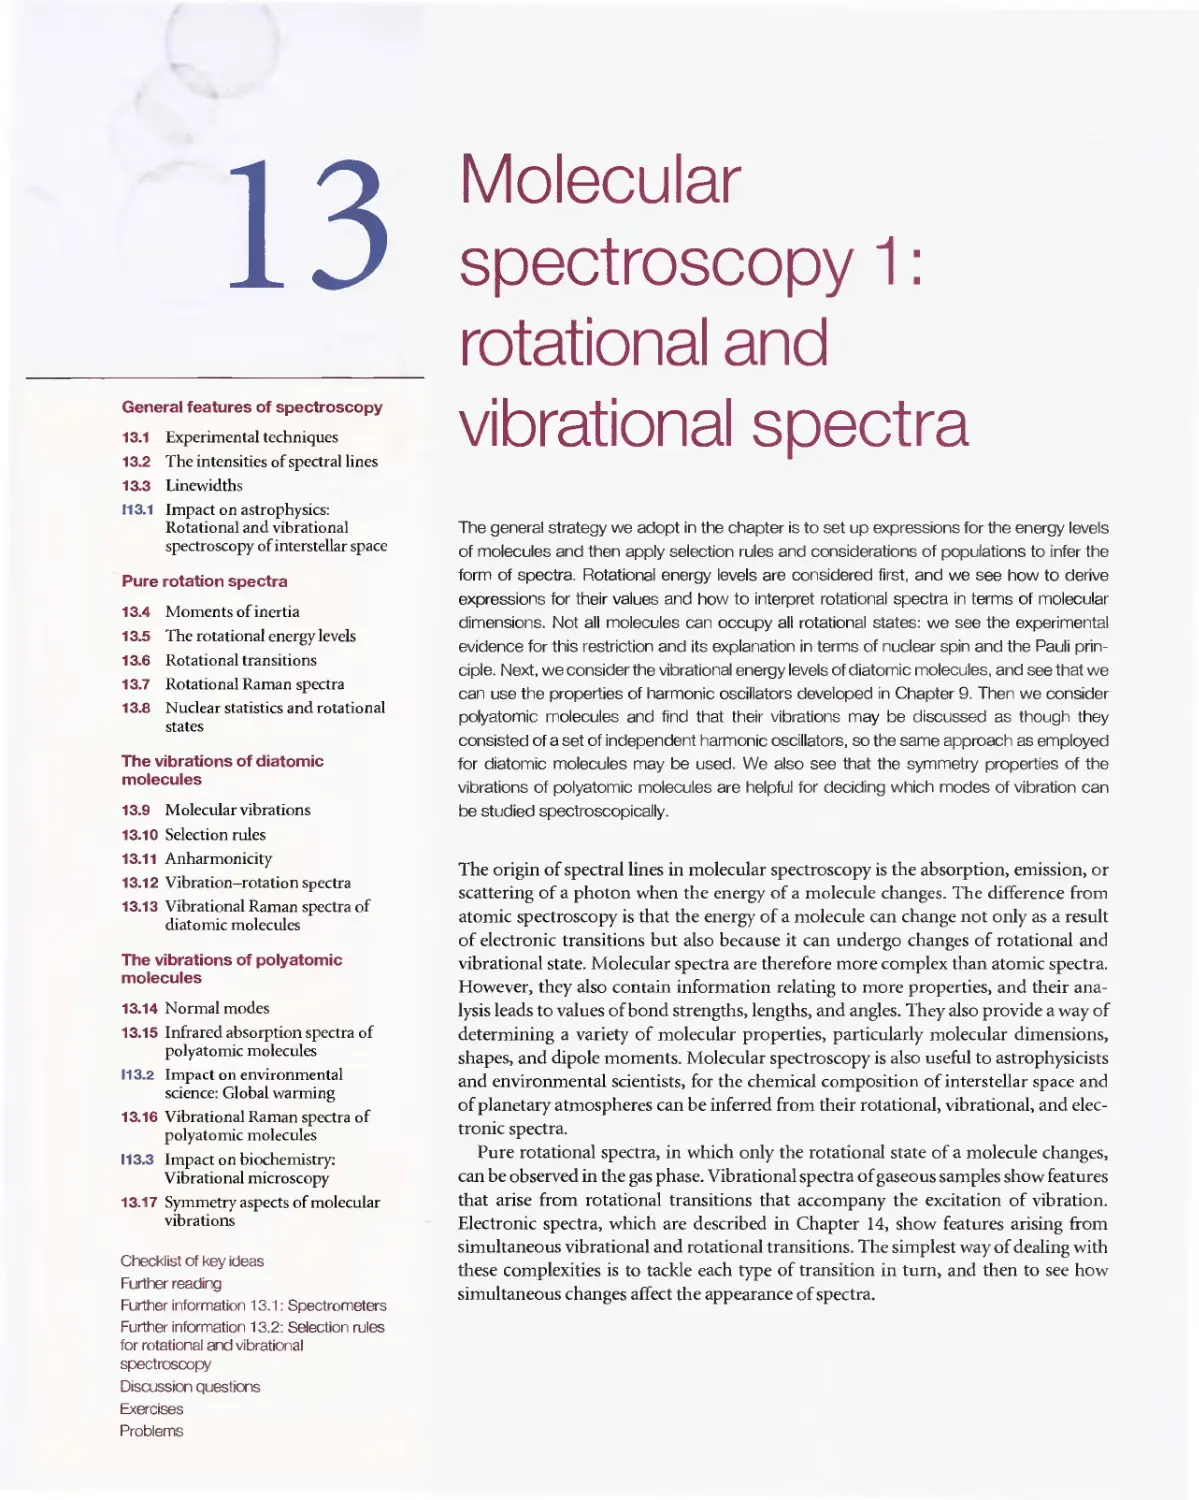 13 - Molecular spectroscopy 1 - Rotational and vibrational spectra